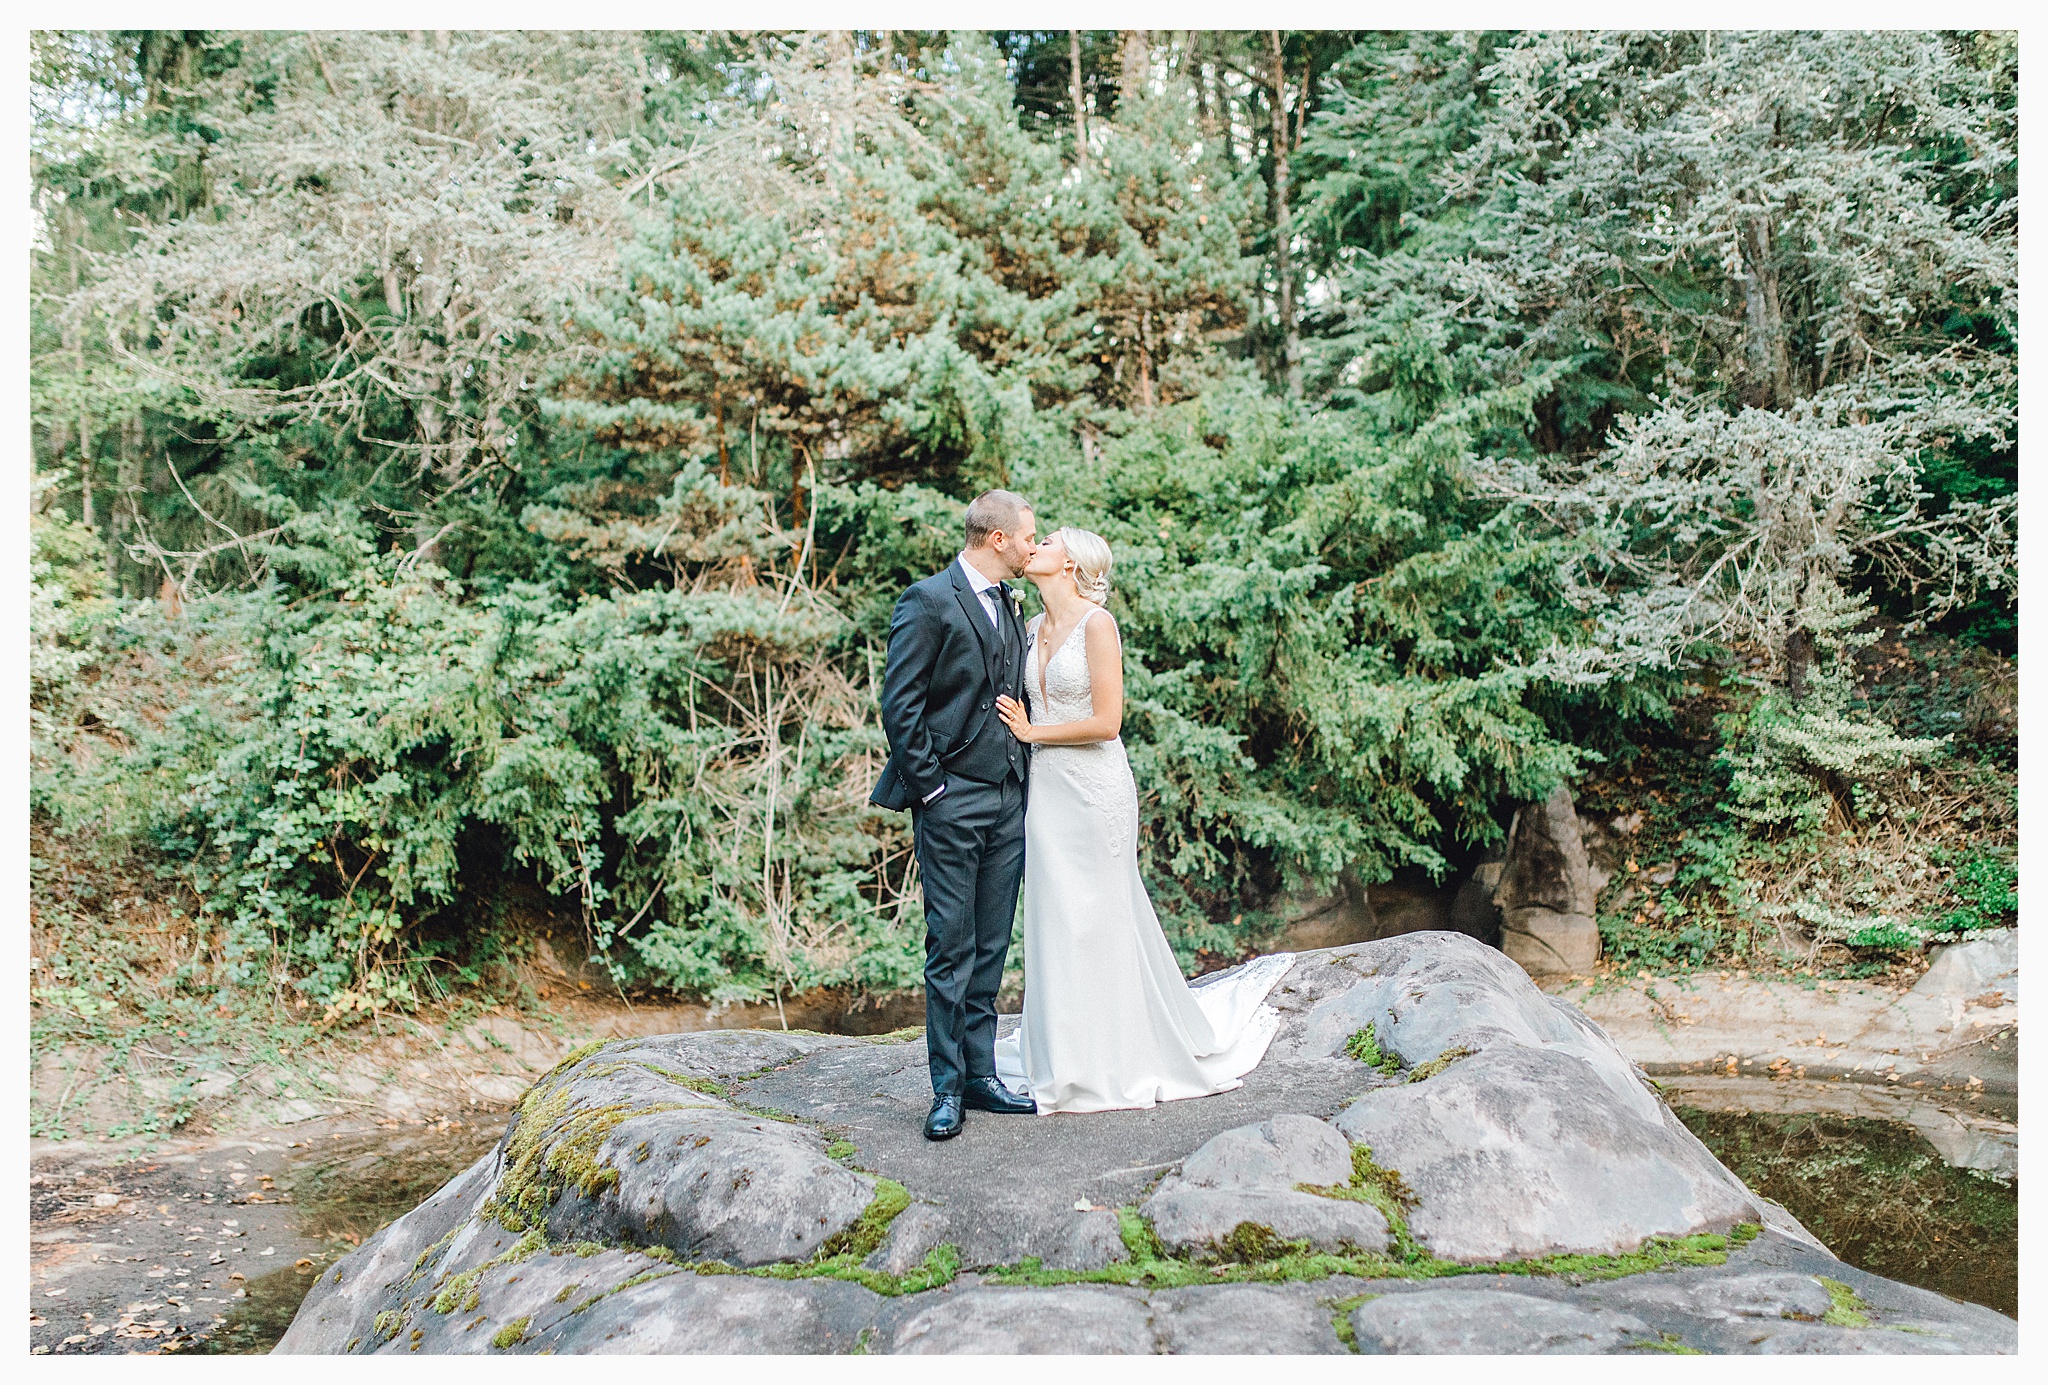 Emma Rose Company Light and Airy Wedding Photographer, Beautiful fall wedding at Rock Creek Gardens Venue in Puyallup, Washington._0037.jpg